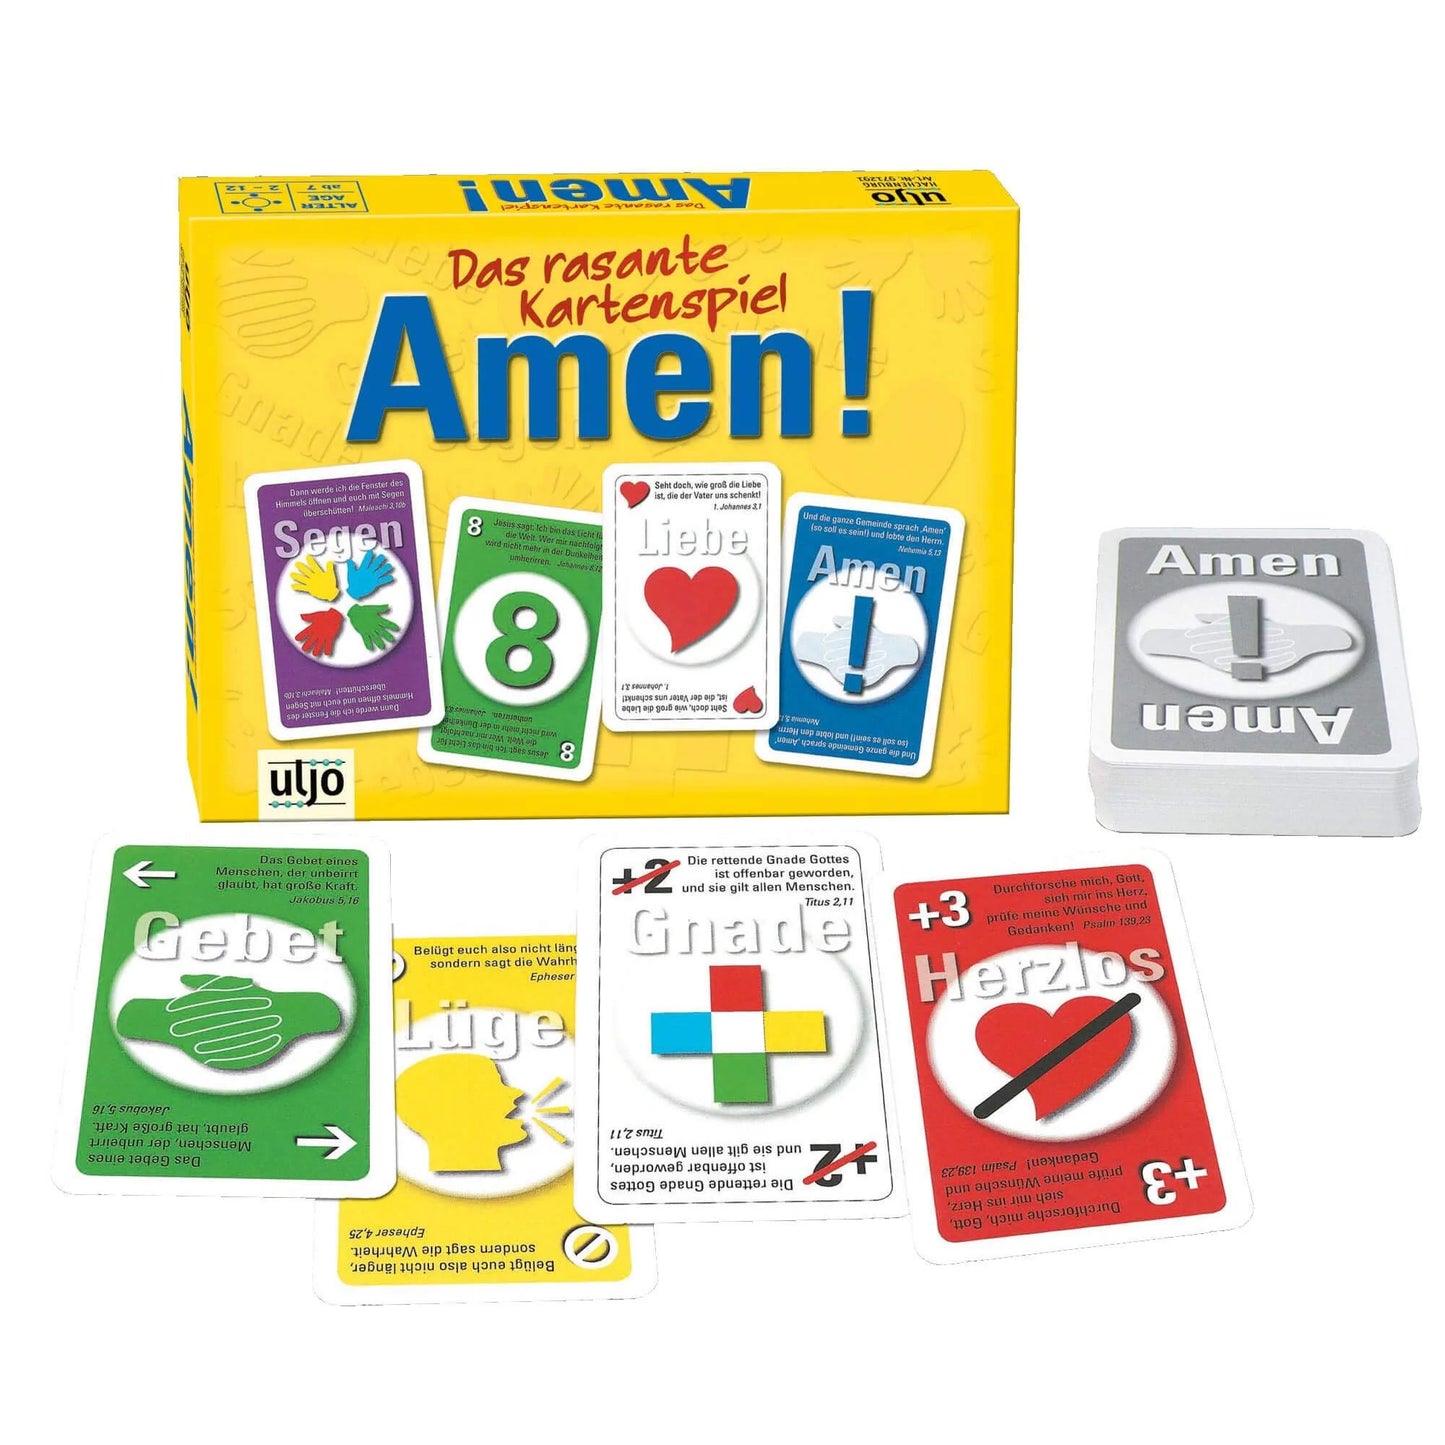 Amen - Das rasante Kartenspiel